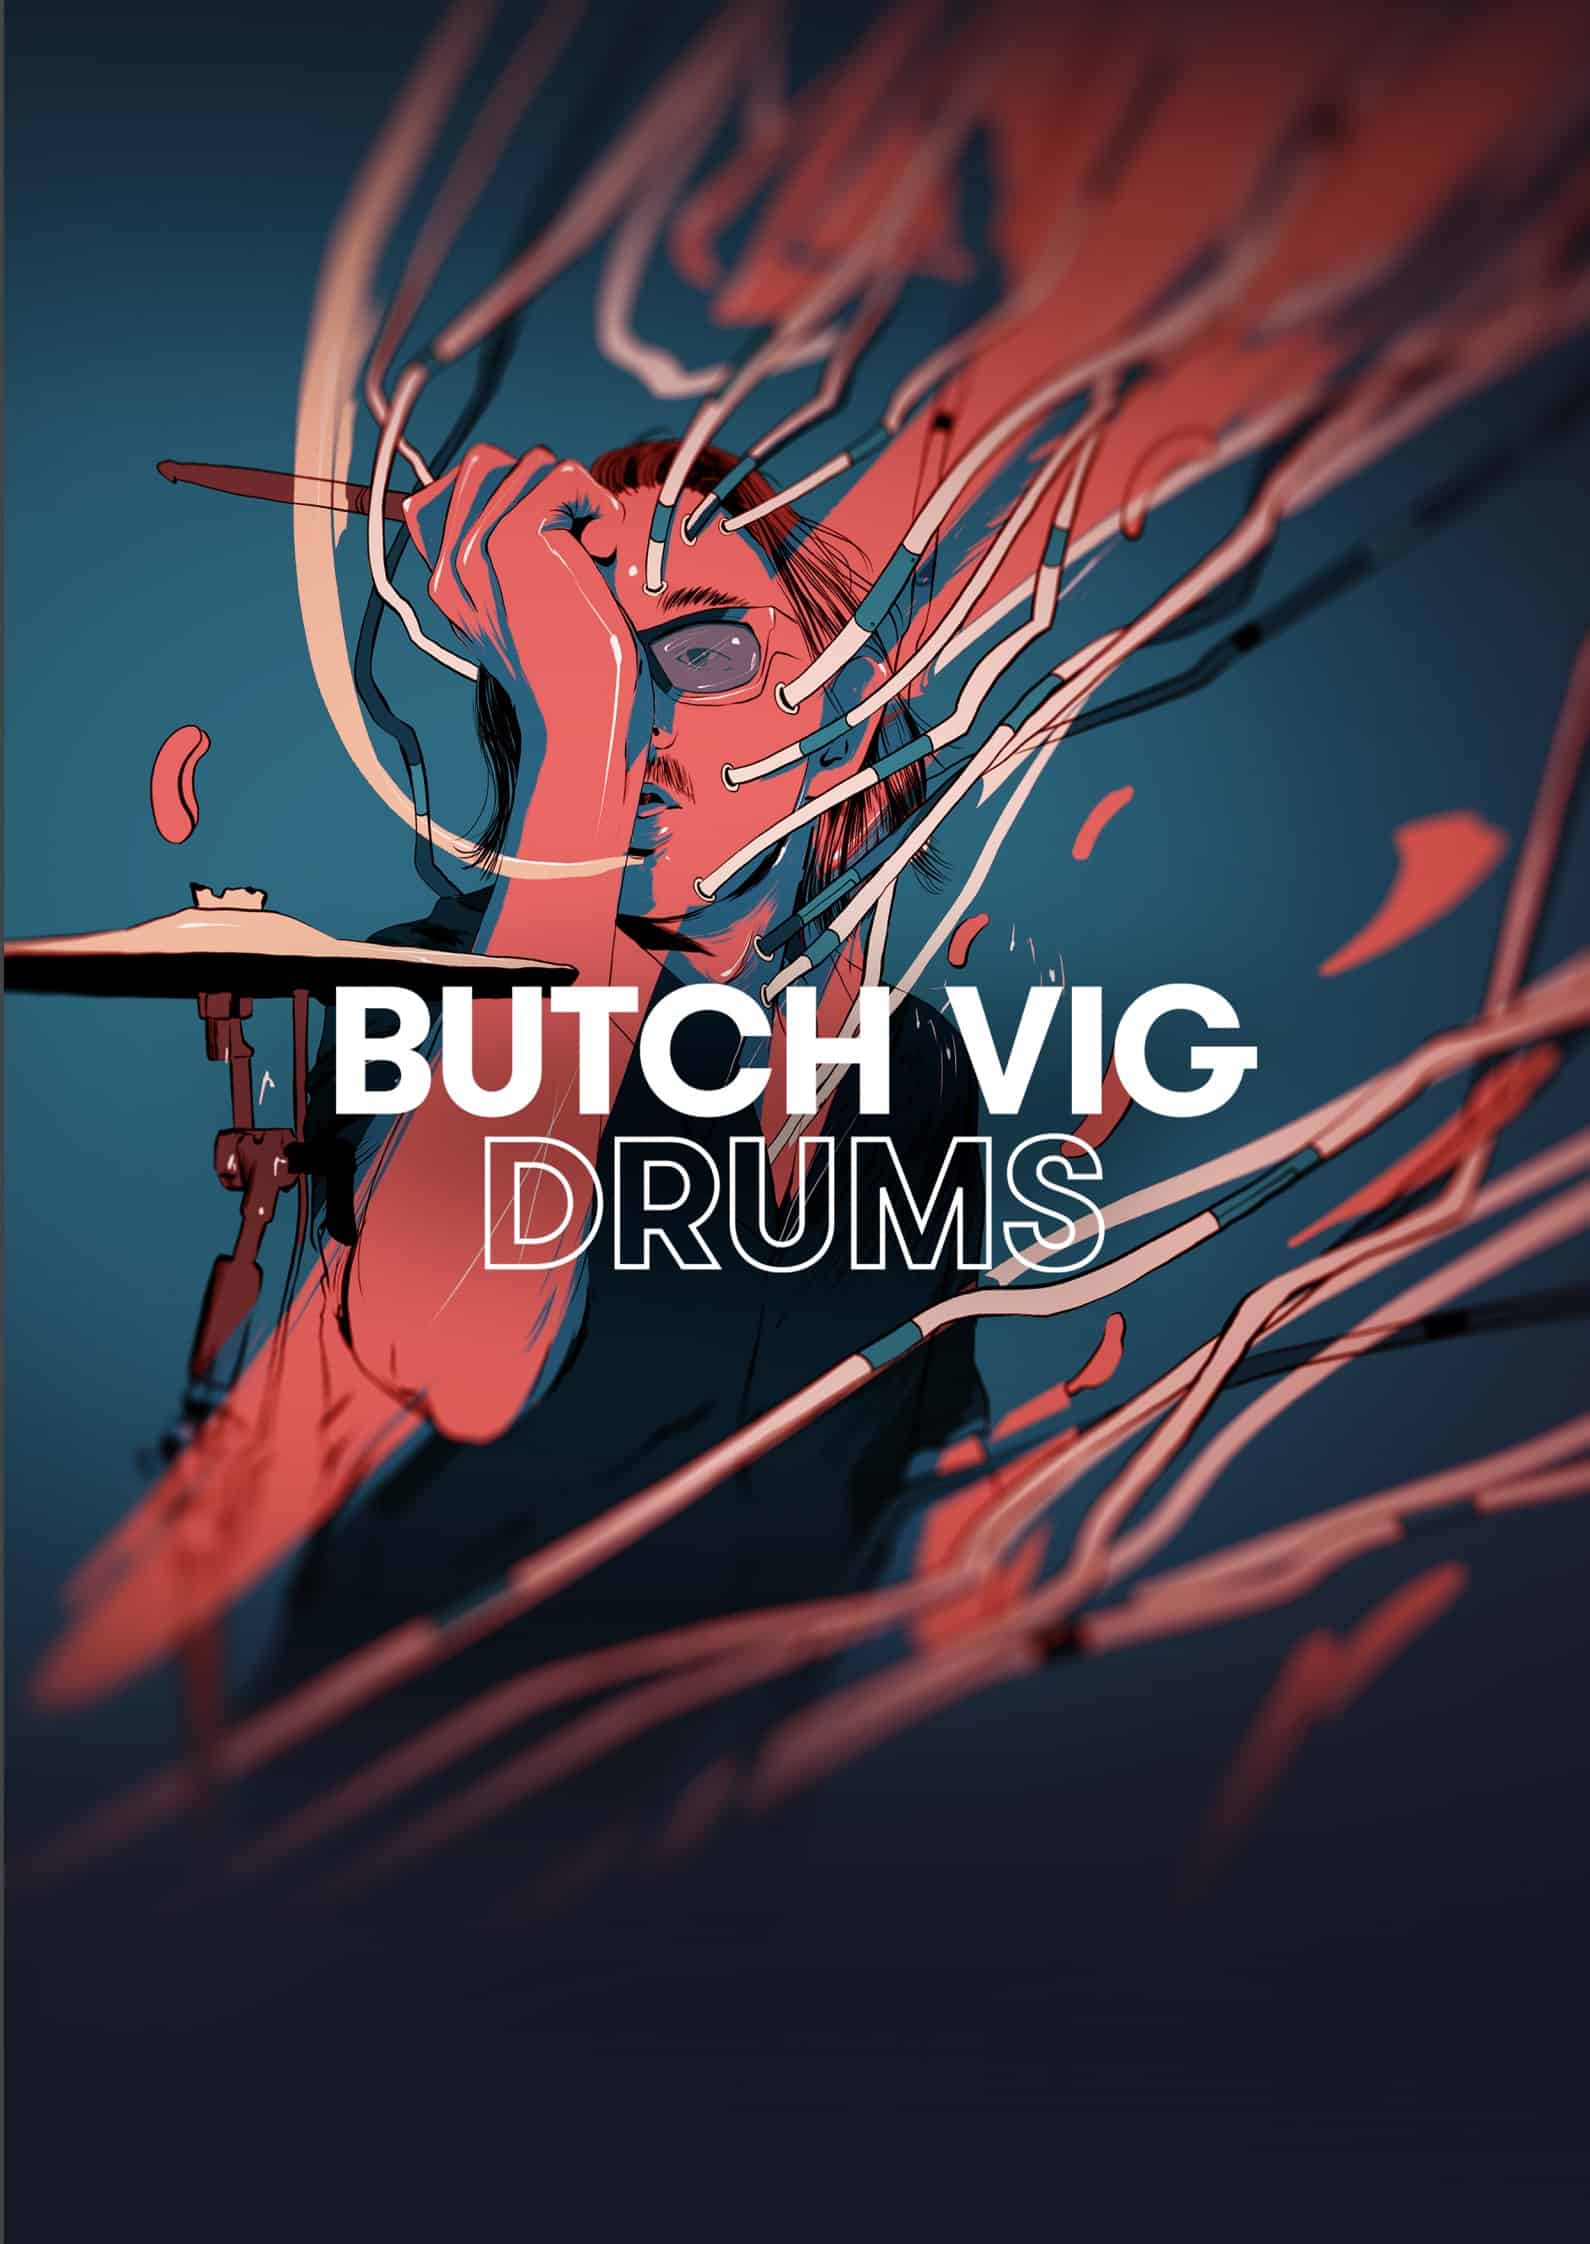 BUTCH VIG DRUMS by Native Instruments | Hard-hitting hybrid drums